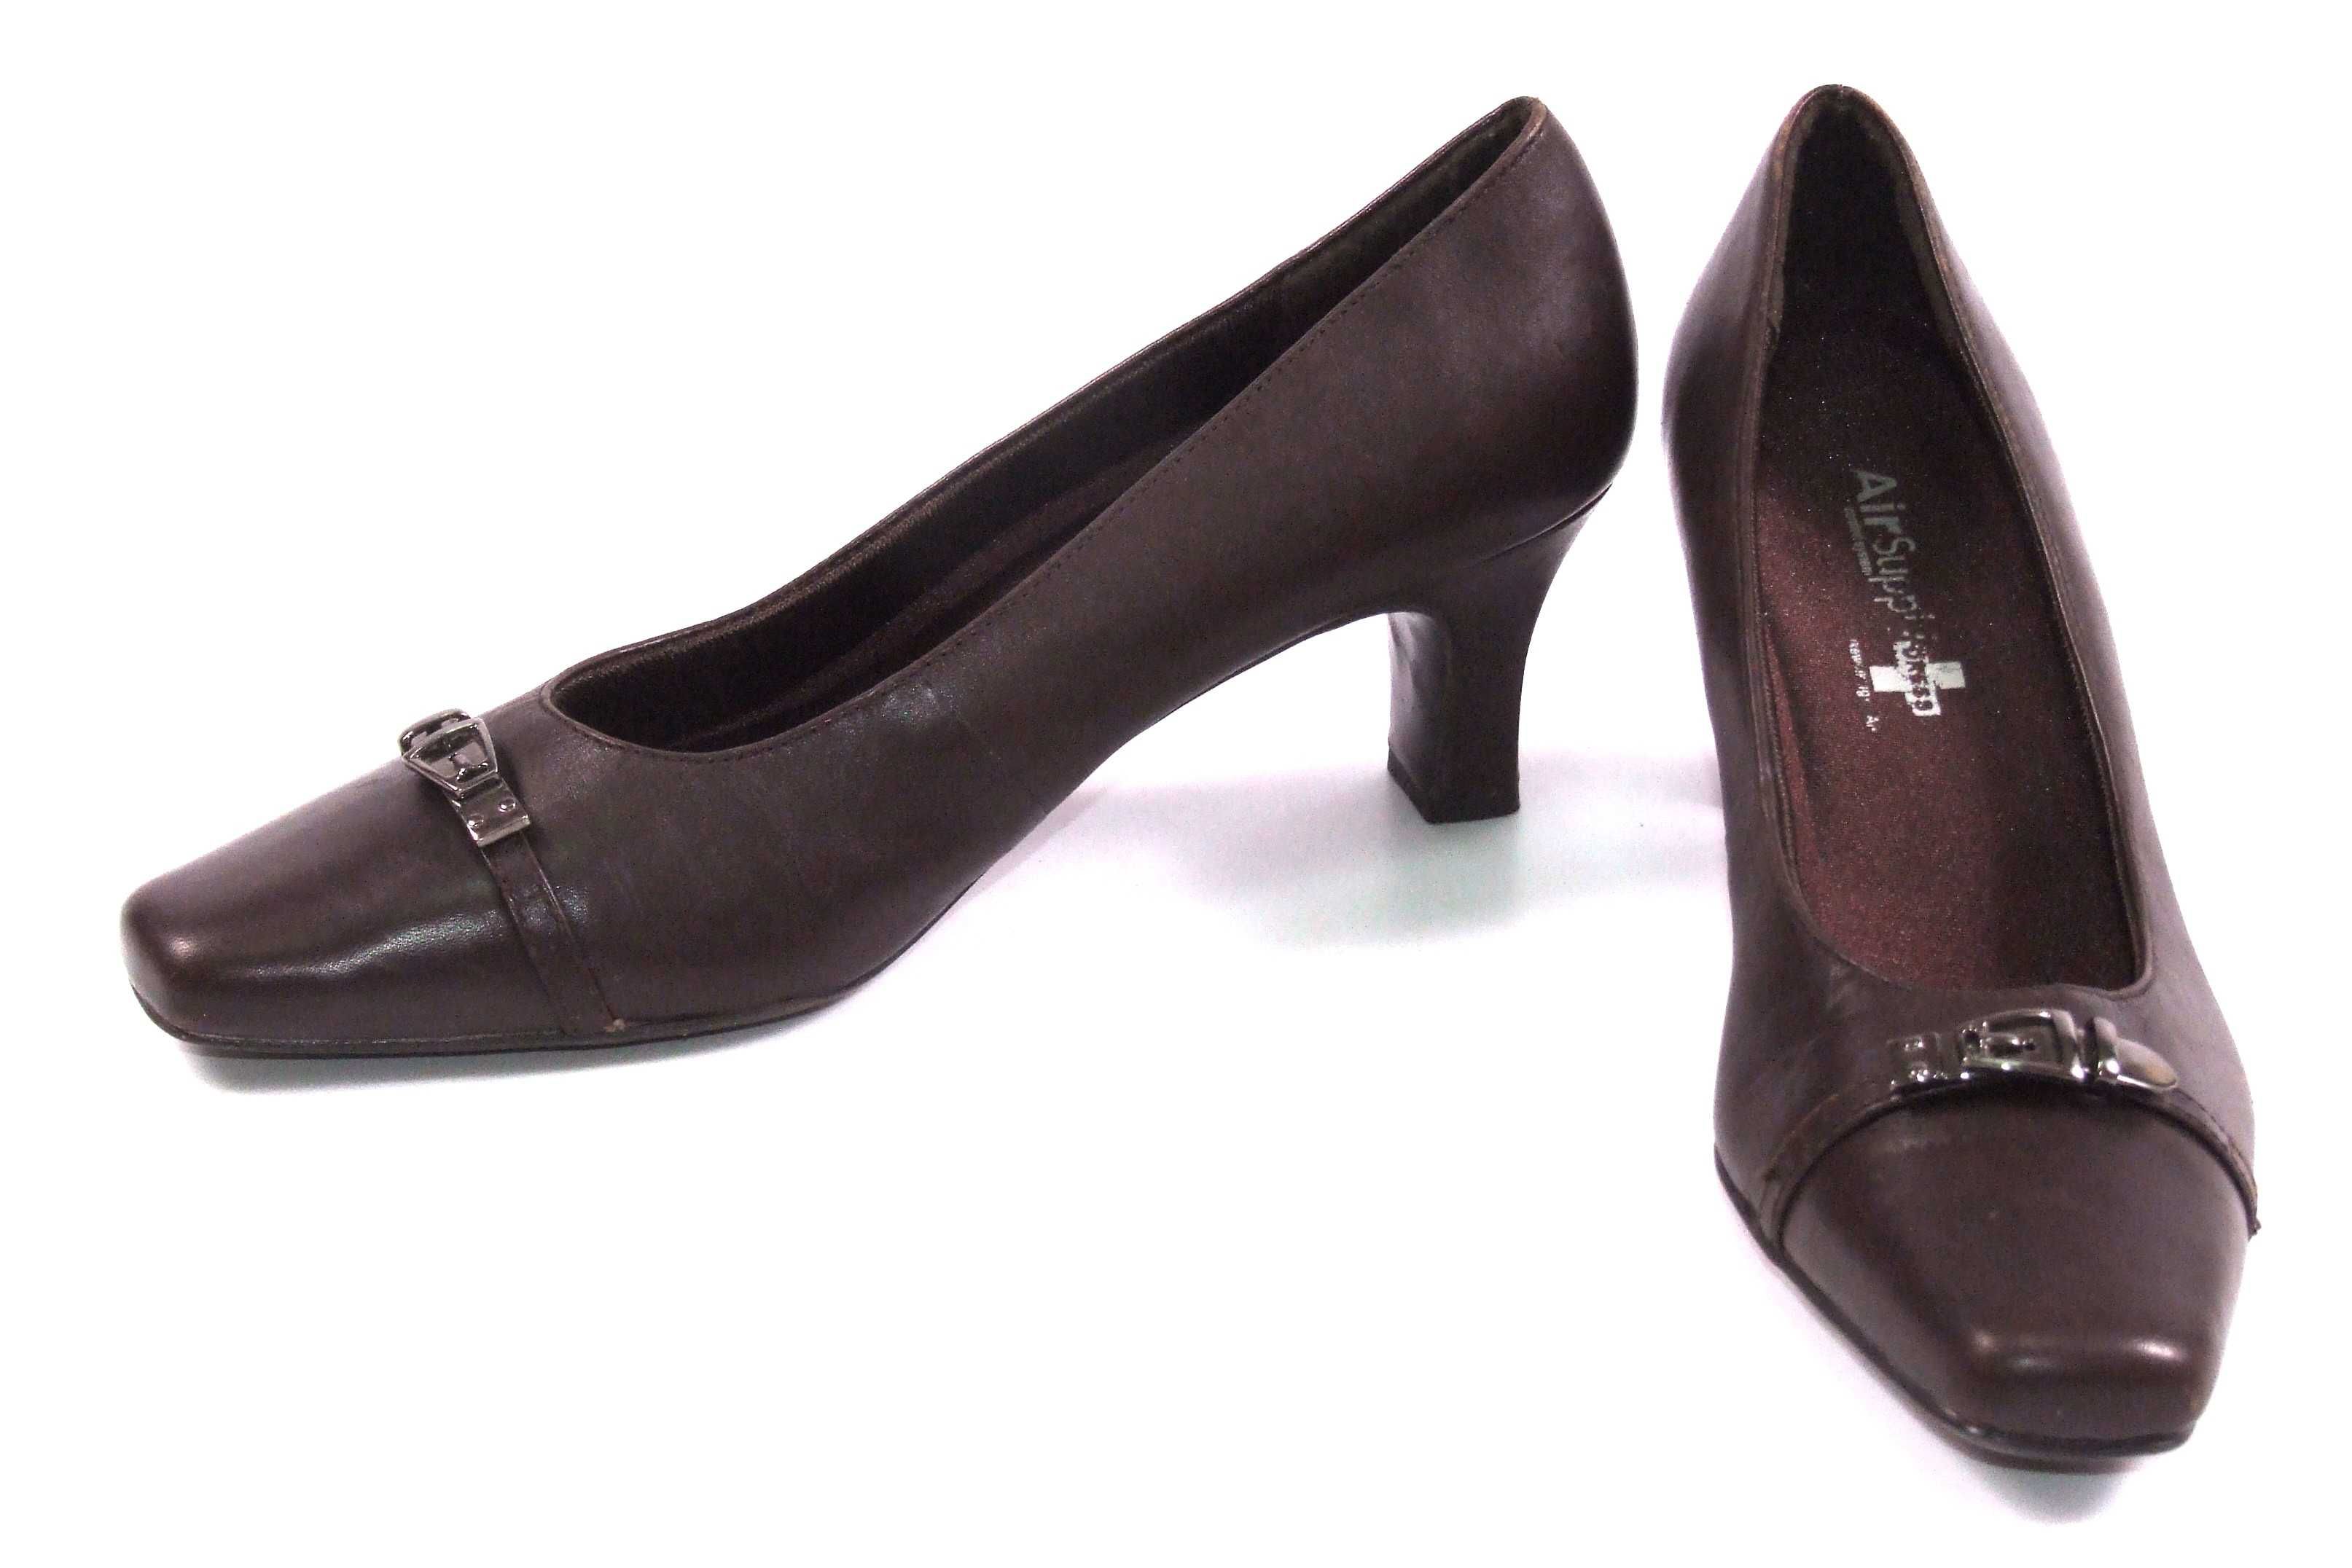 Pantofi dama "AIR SUPPLY" 37,5 - 38, piele 100%, maro inchis, NOI